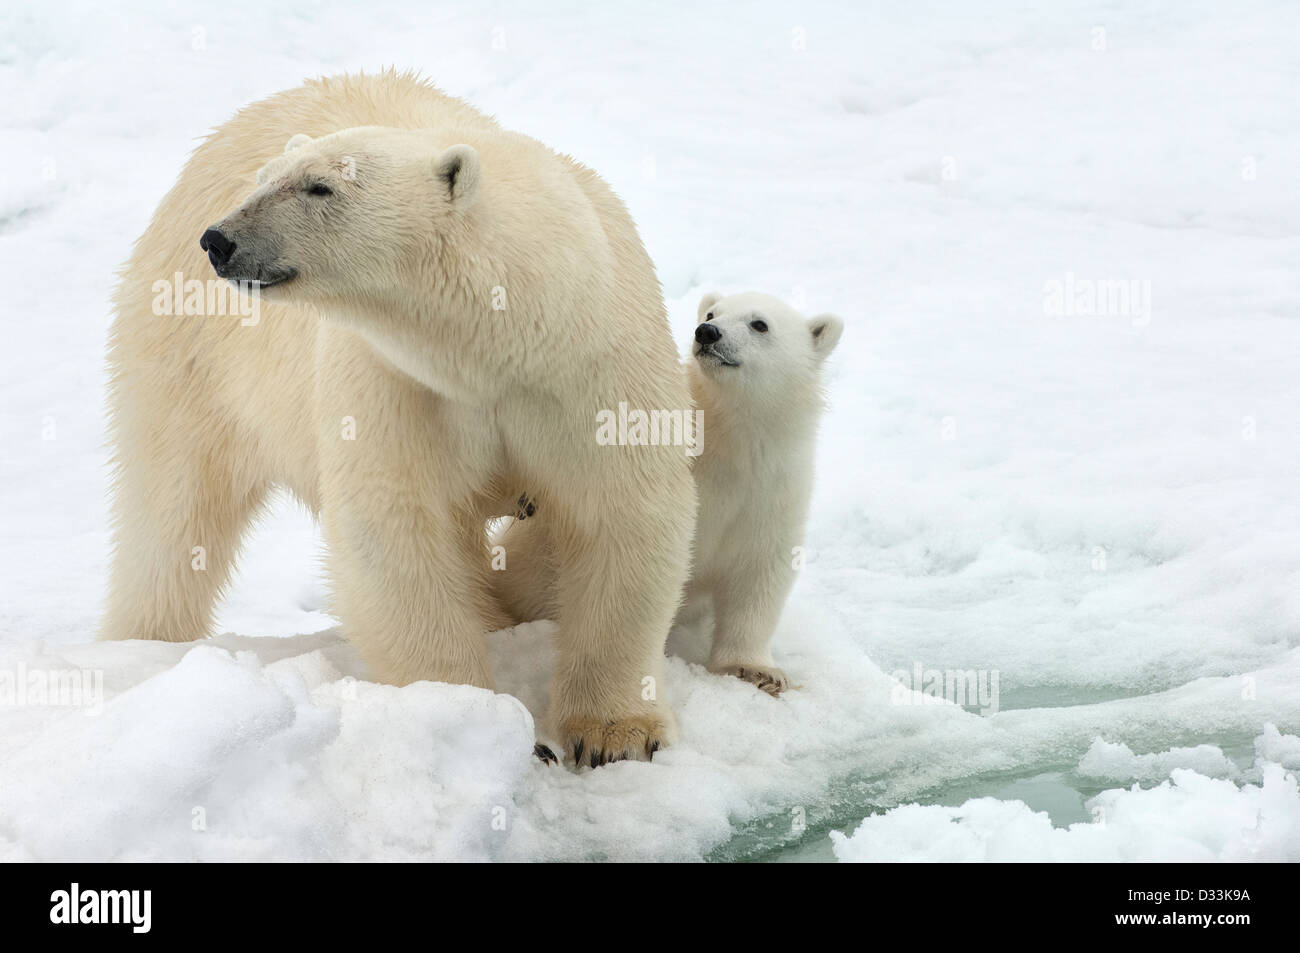 Female polar bear (Ursus maritimus) and cub, Svalbard Archipelago, Barents Sea, Norway Stock Photo